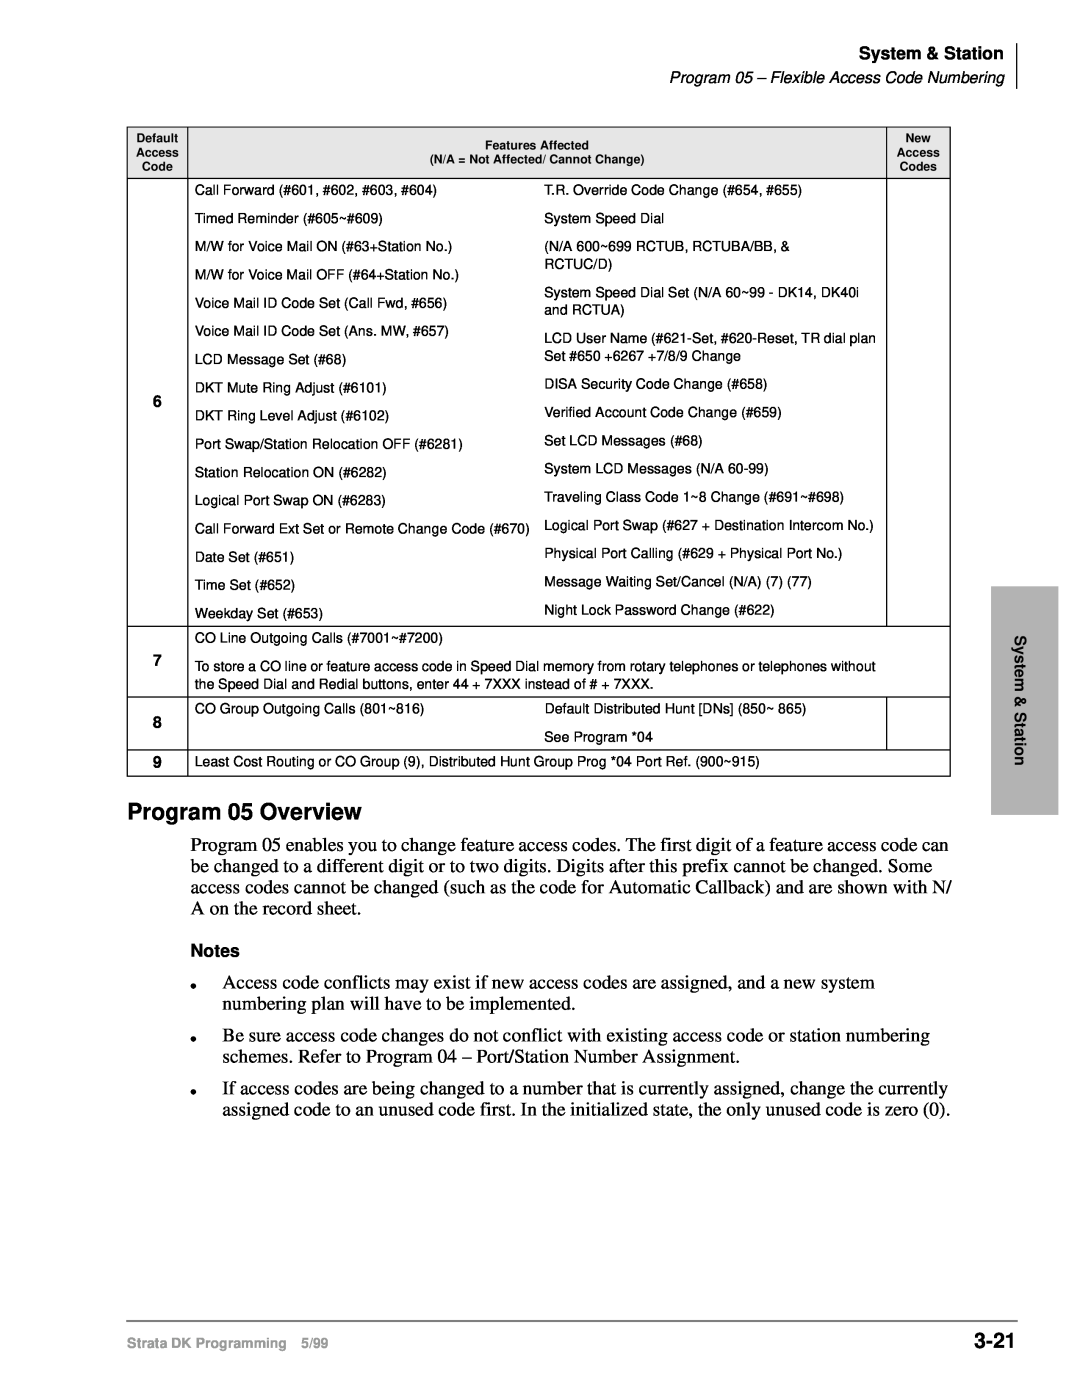 Toshiba dk14 manual Program 05 Overview, 3-21 